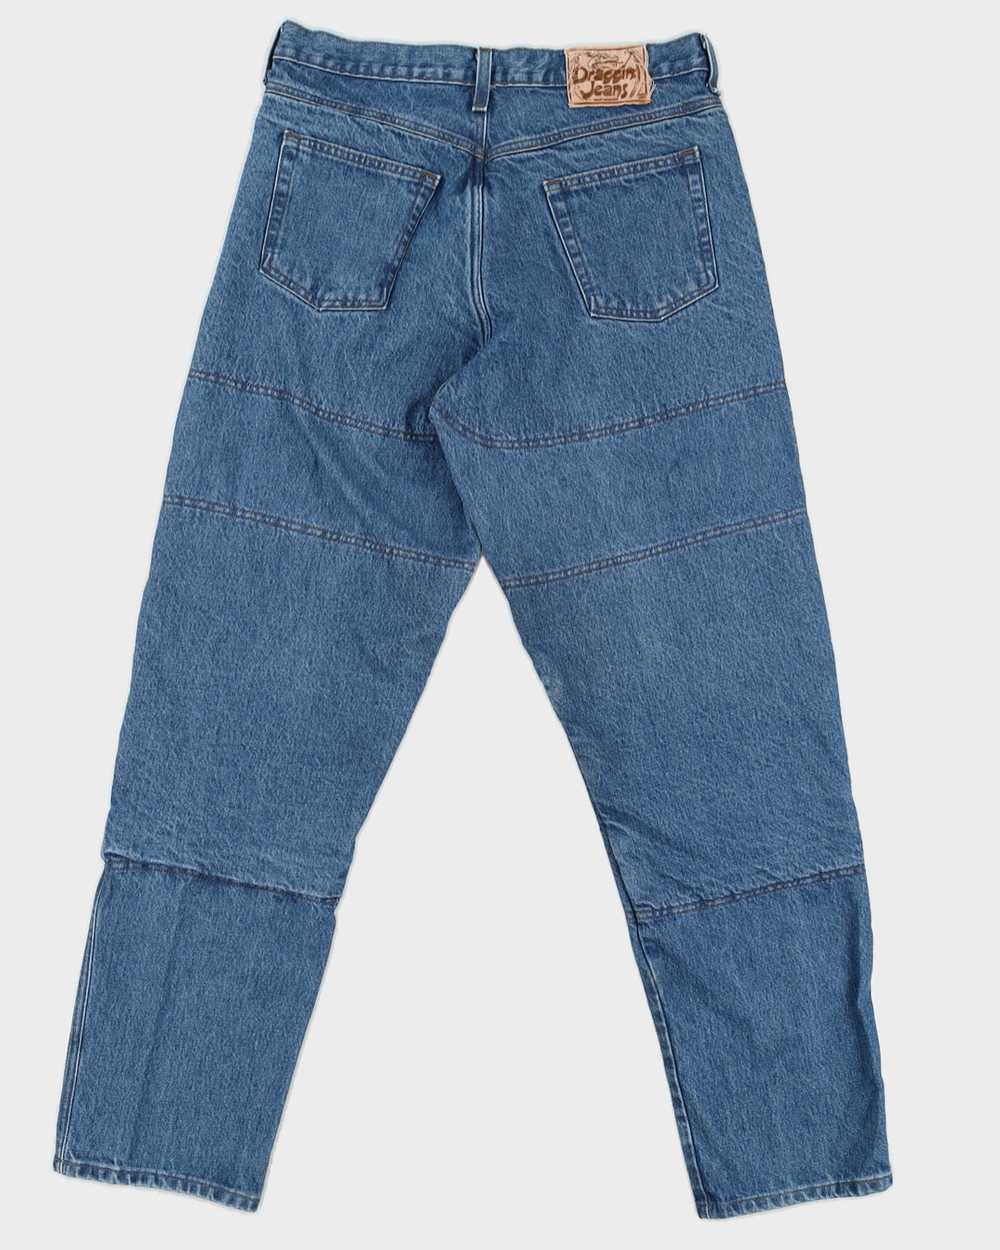 Vintage 90s Draggin Jeans Medium Wash - W34 L32 - image 2